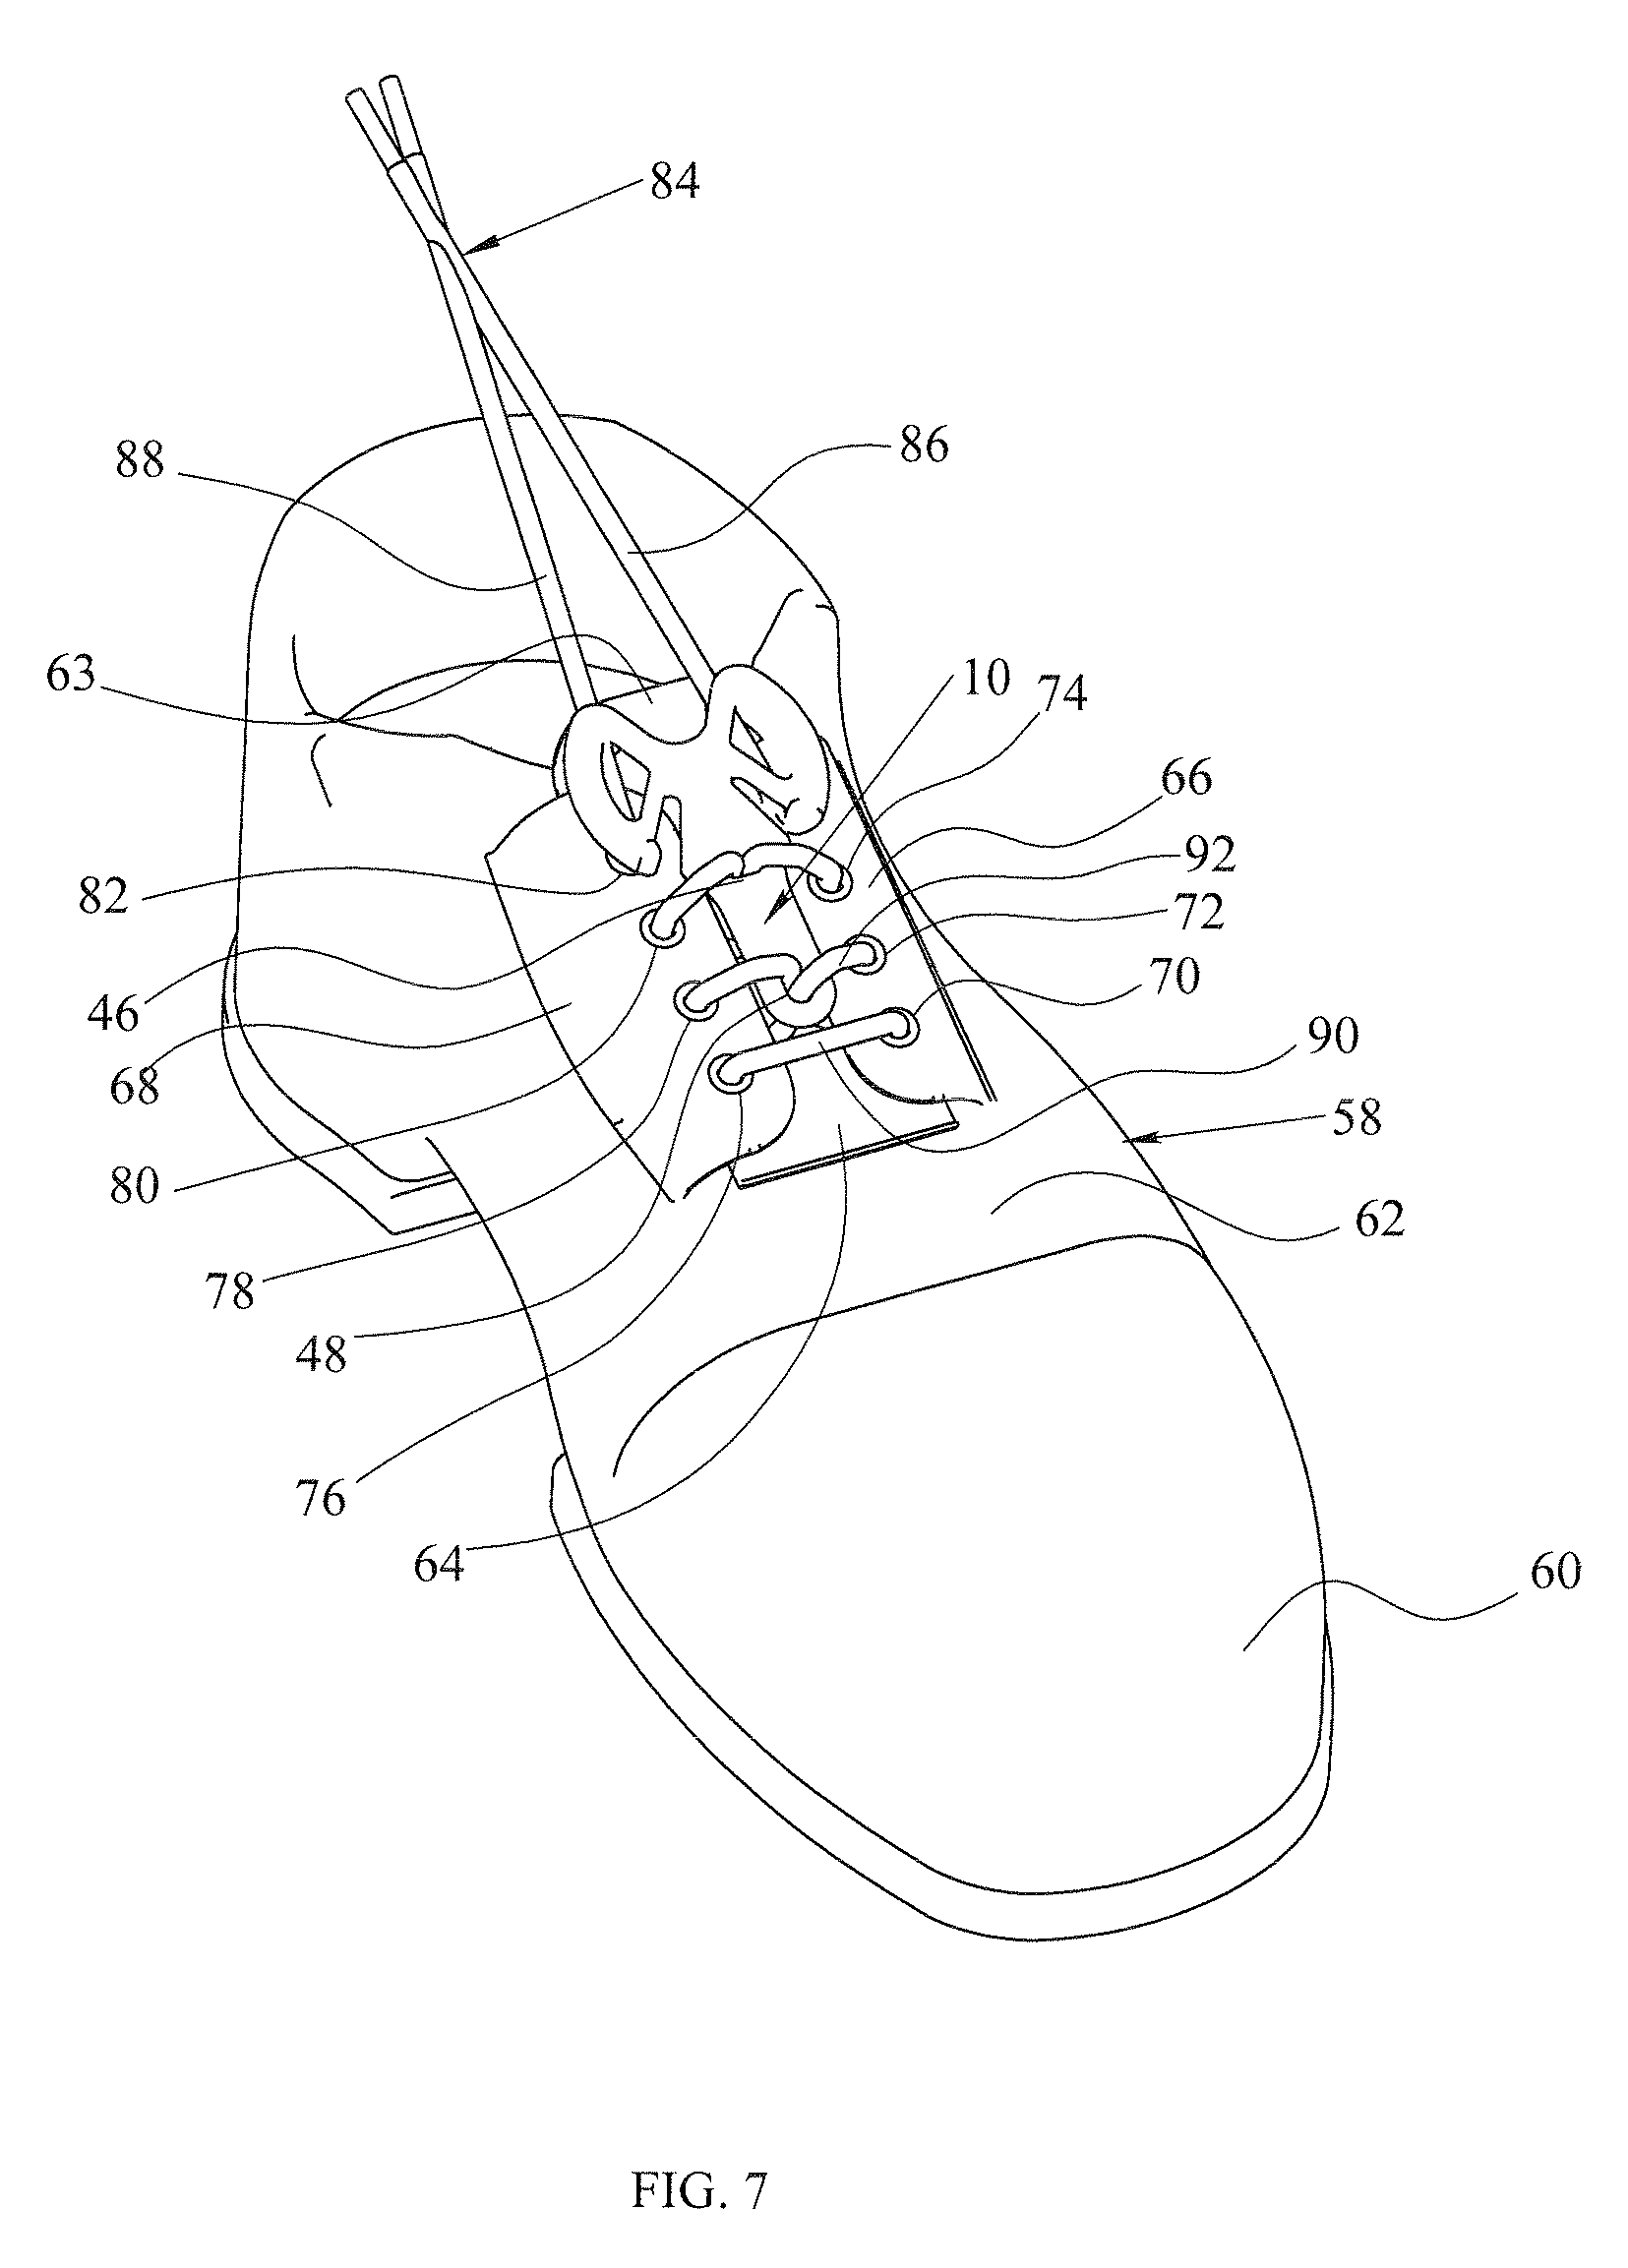 Shoe tying aid and method